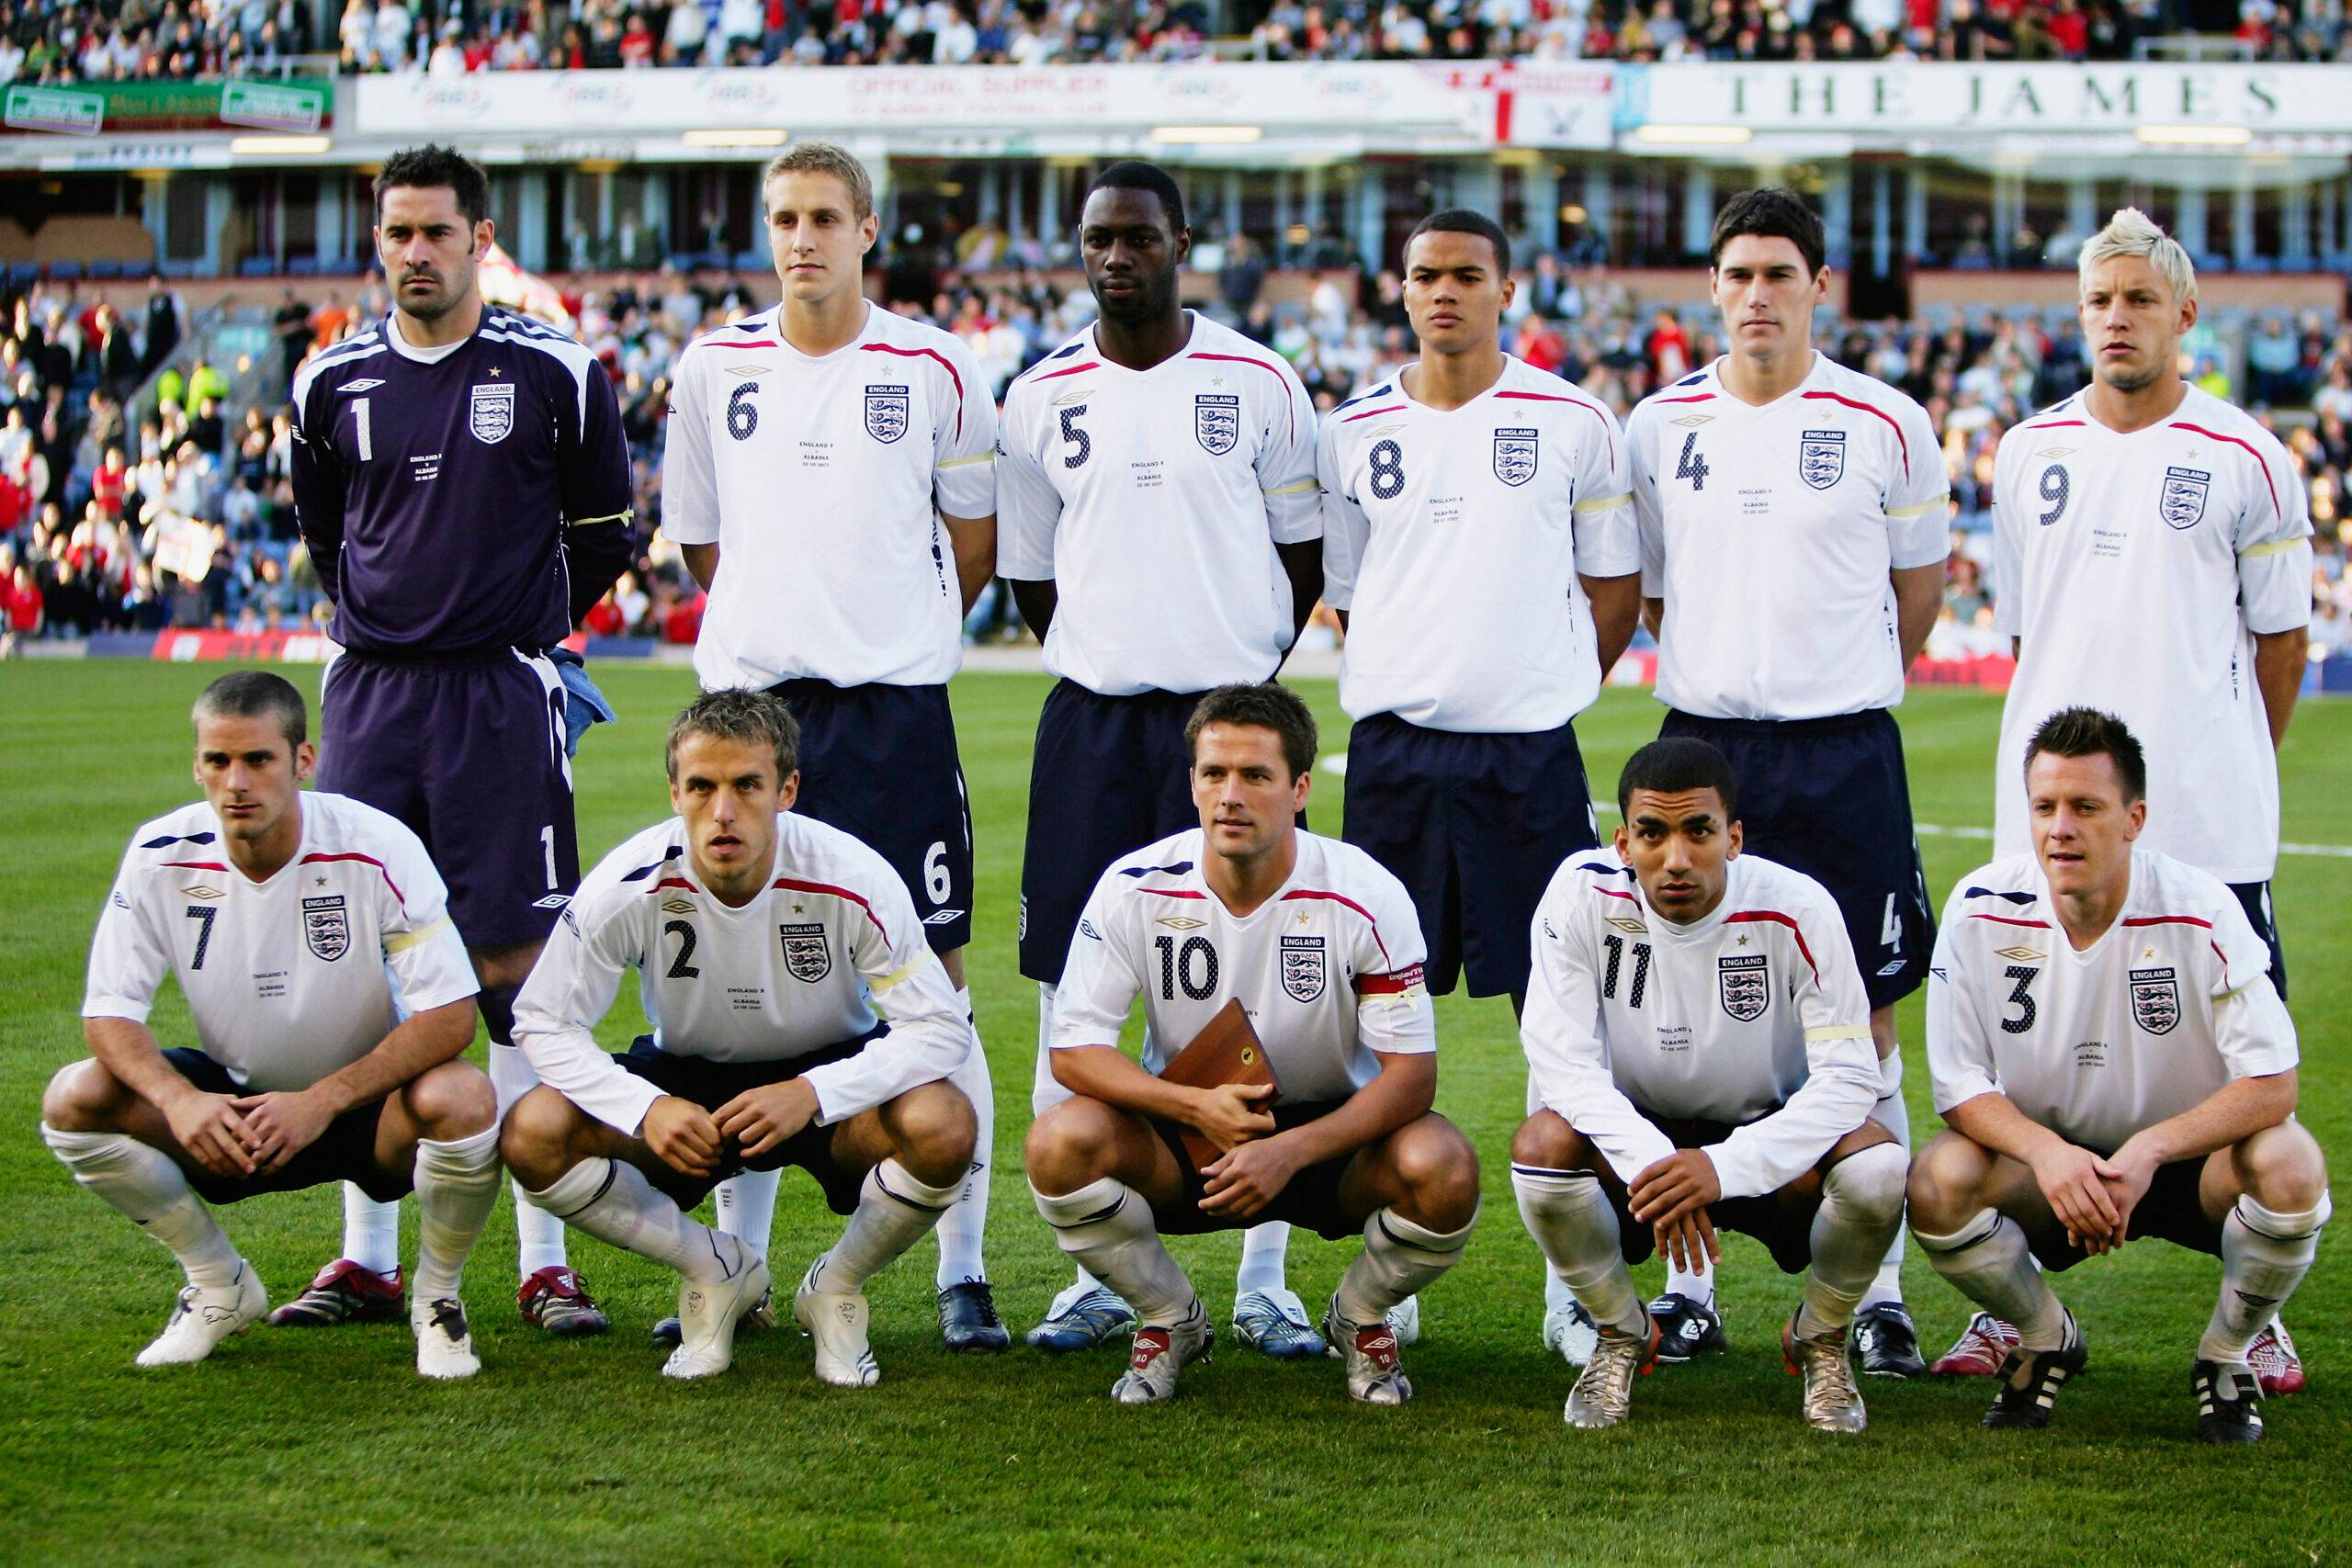 England B team of 2007